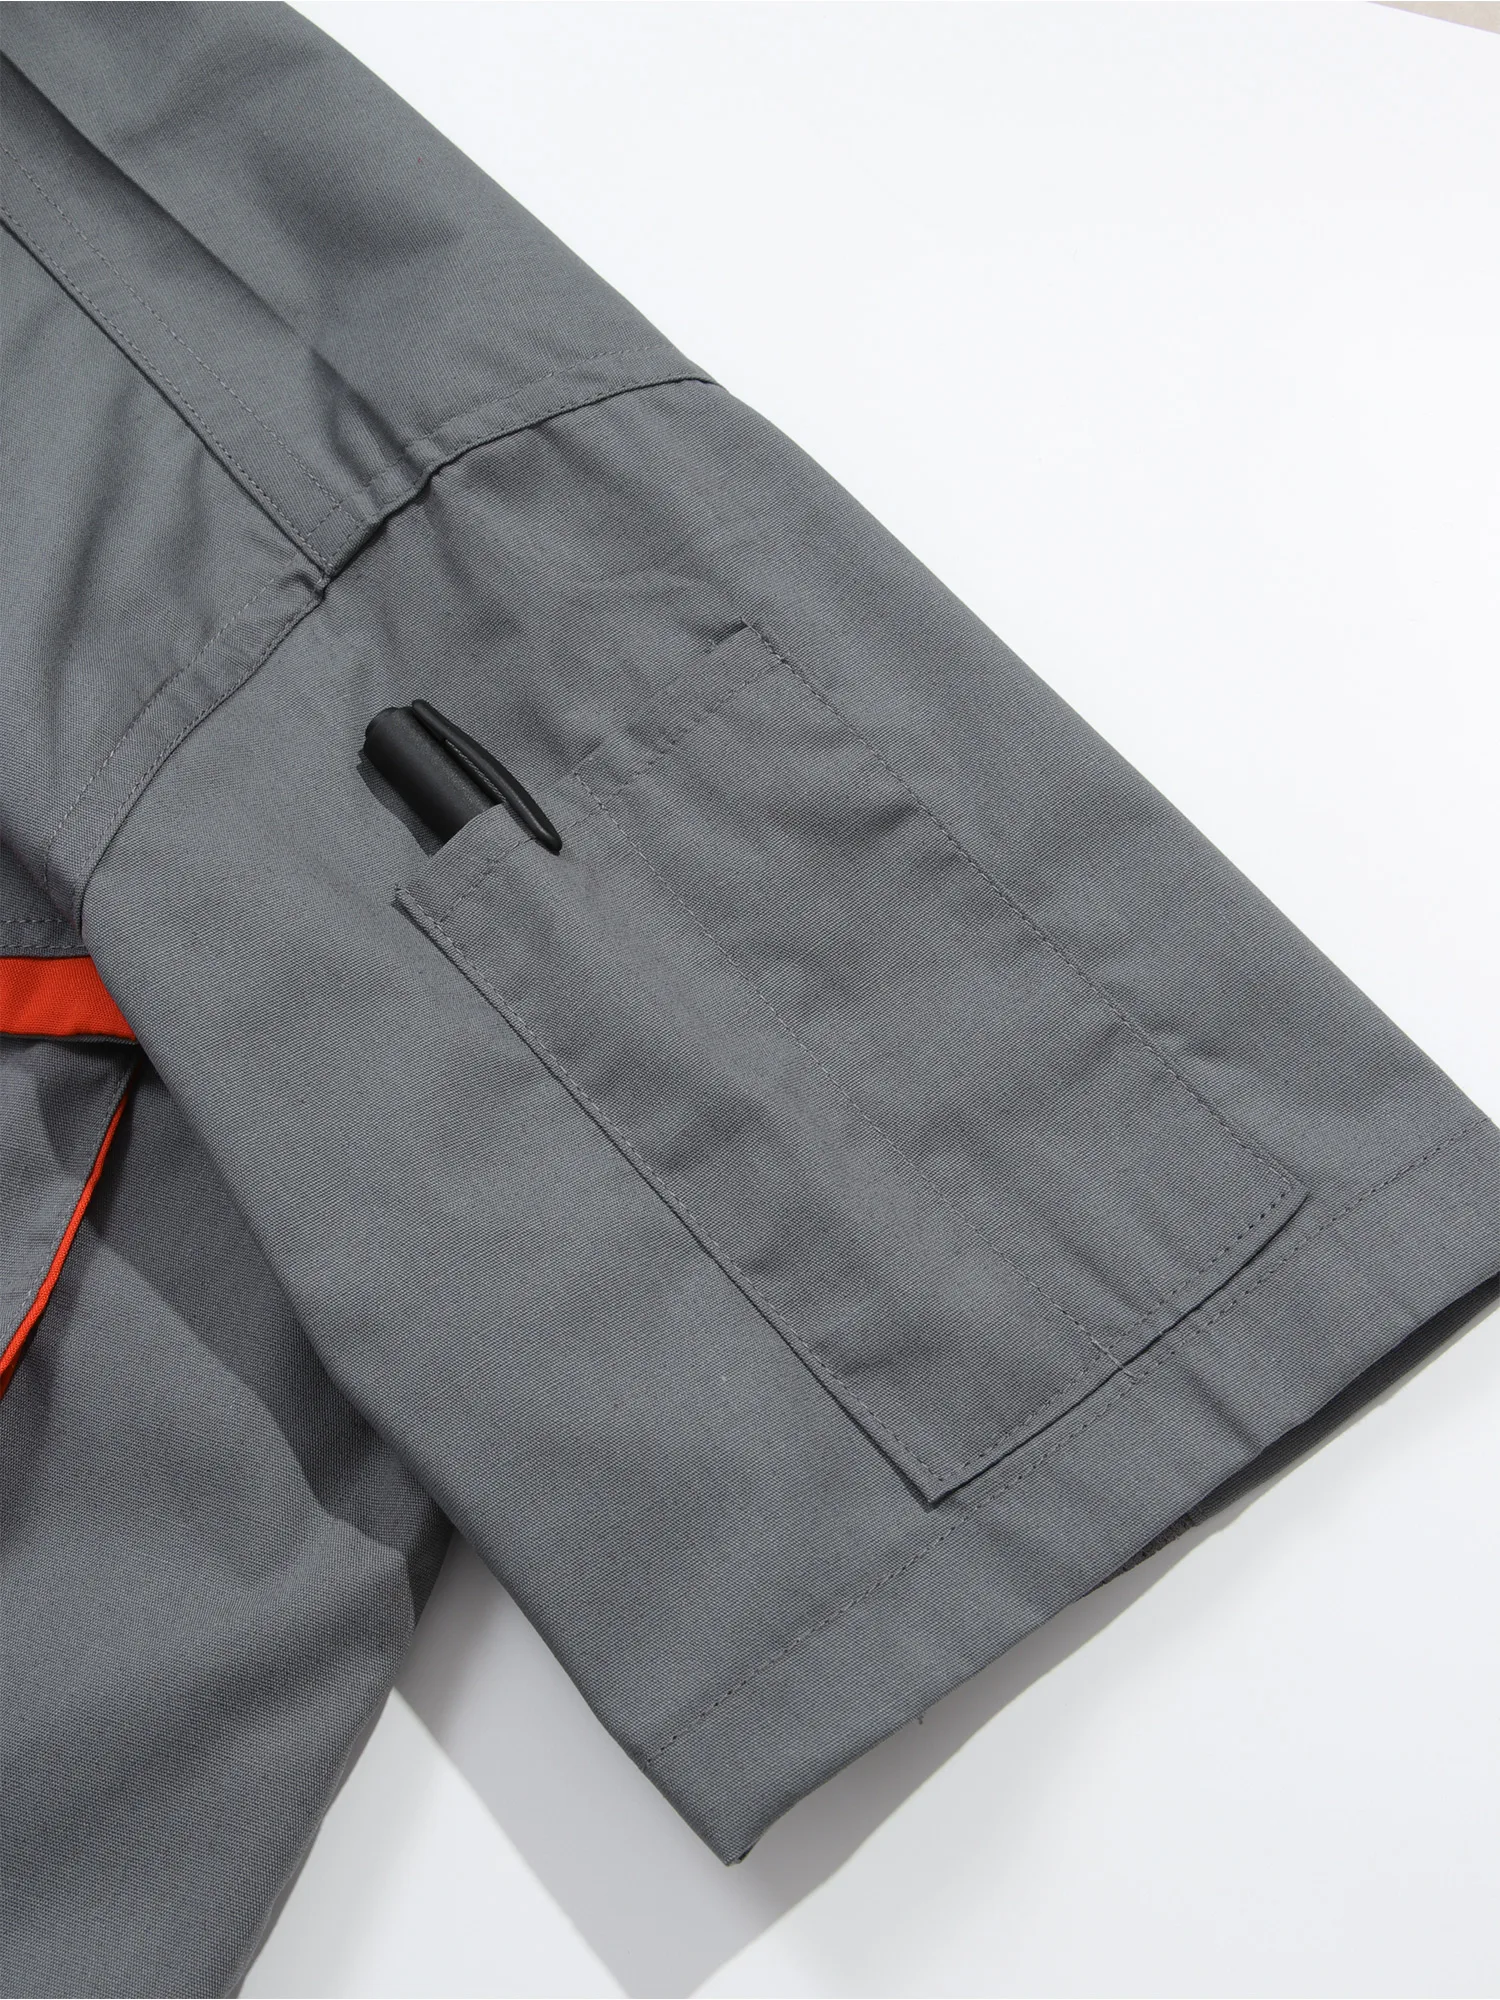 Mens Short Sleeve Work Shirt Adults Work Jacket Zipper Button Pockets Factory Auto Mechanic Workshop Uniform Casual Gray Blouse images - 6